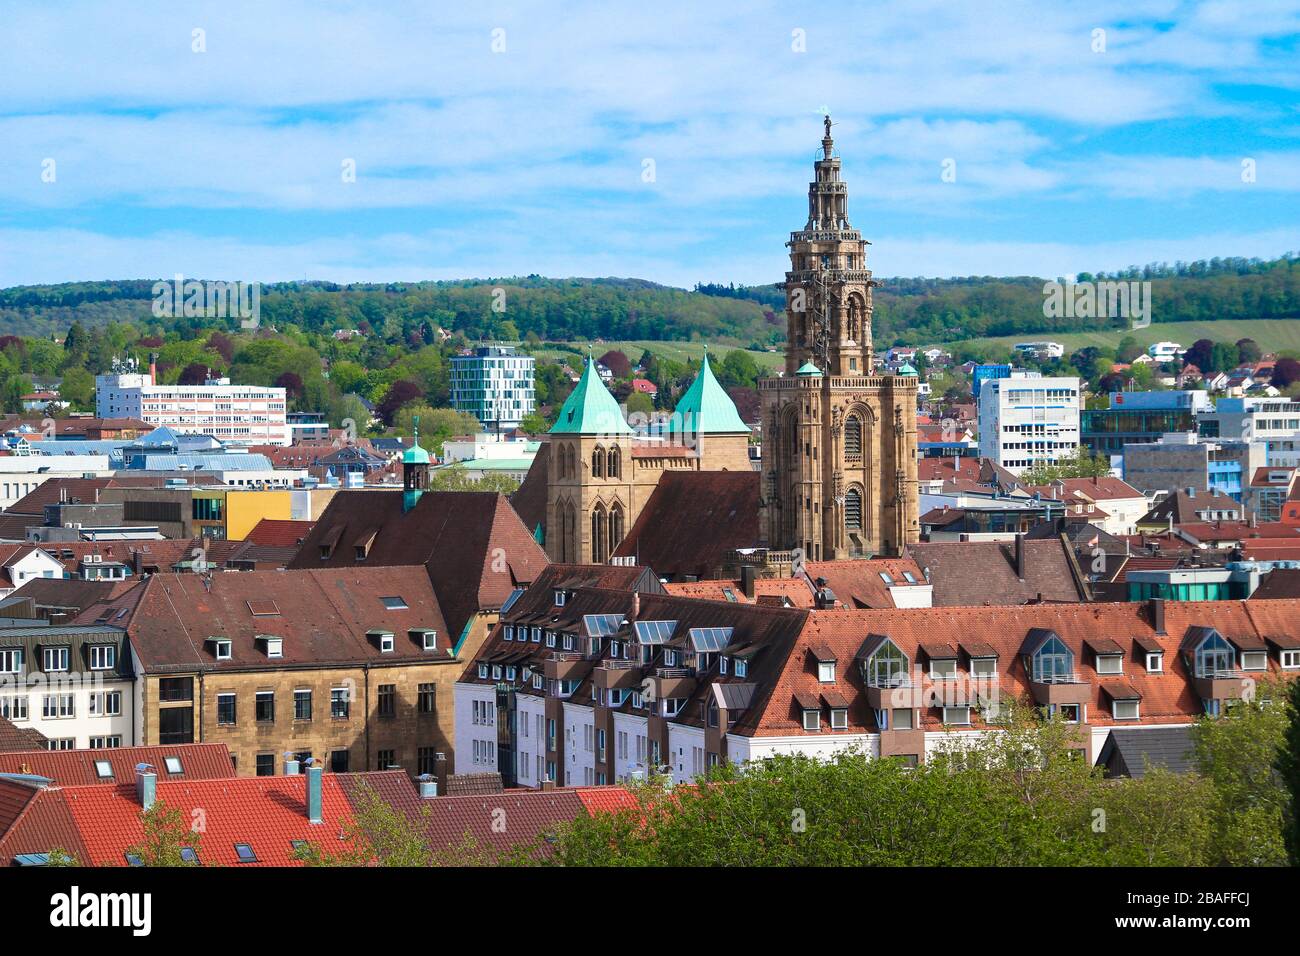 The Church Kilianskirche in Heilbronn, Germany Stock Photo - Alamy